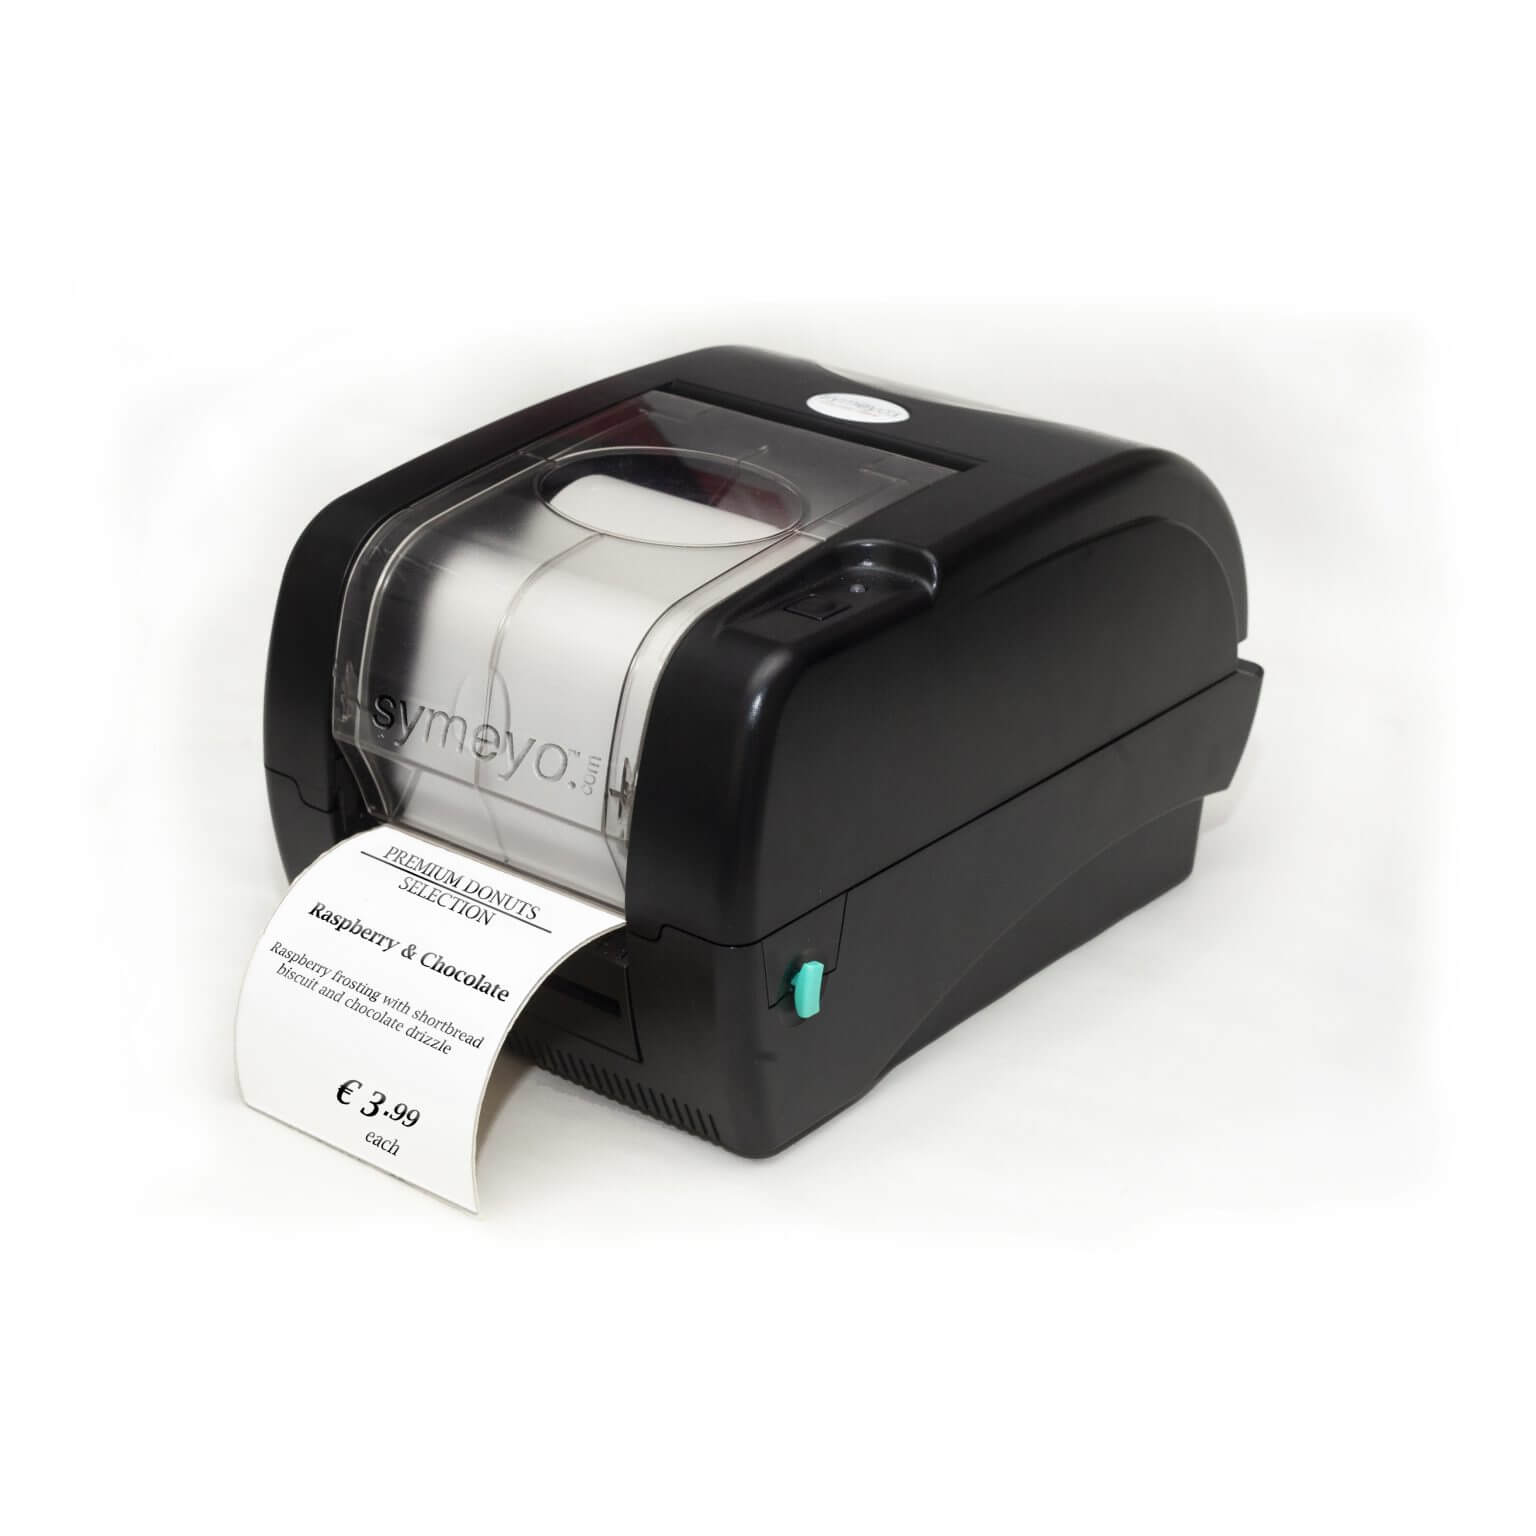 Symeyo Printer - Highly Versatile Product Display Label System